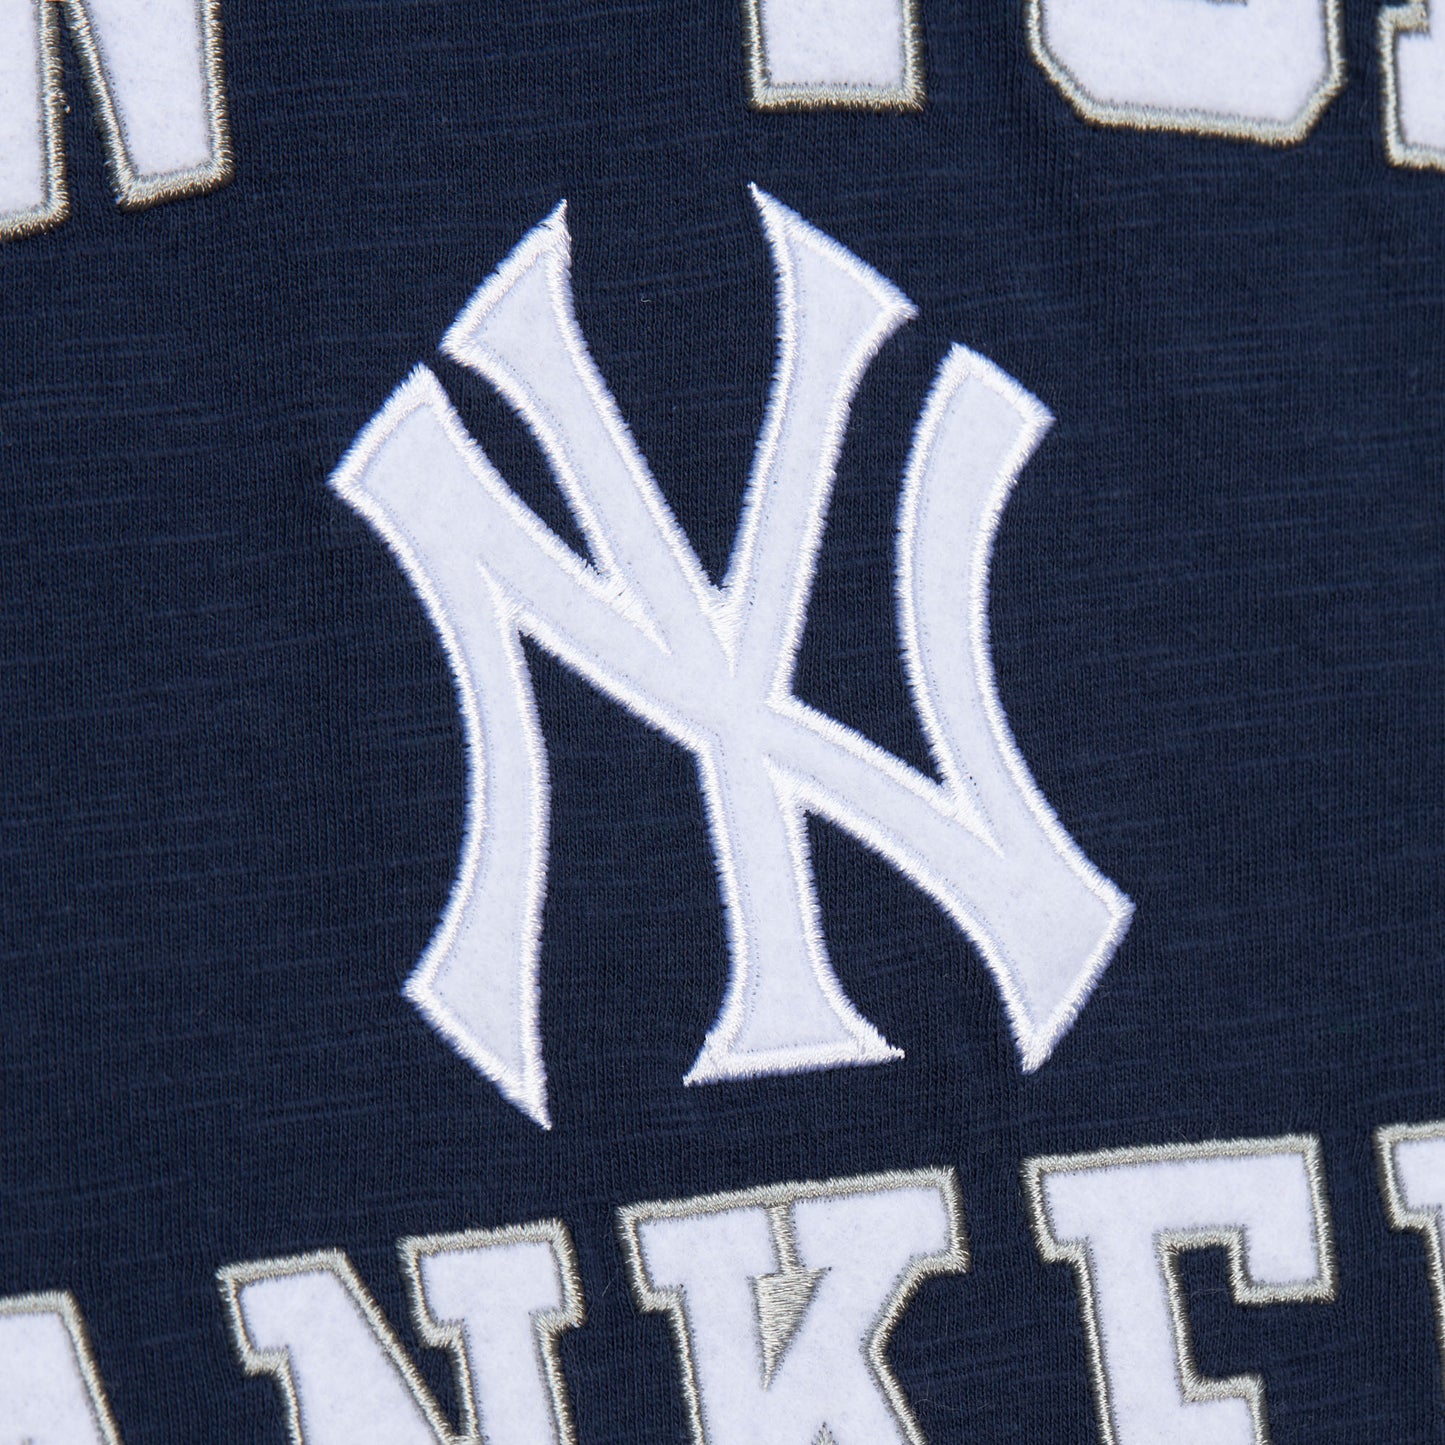 New York Yankees Mitchell & Ness Legendary Slub Vintage T-Shirt